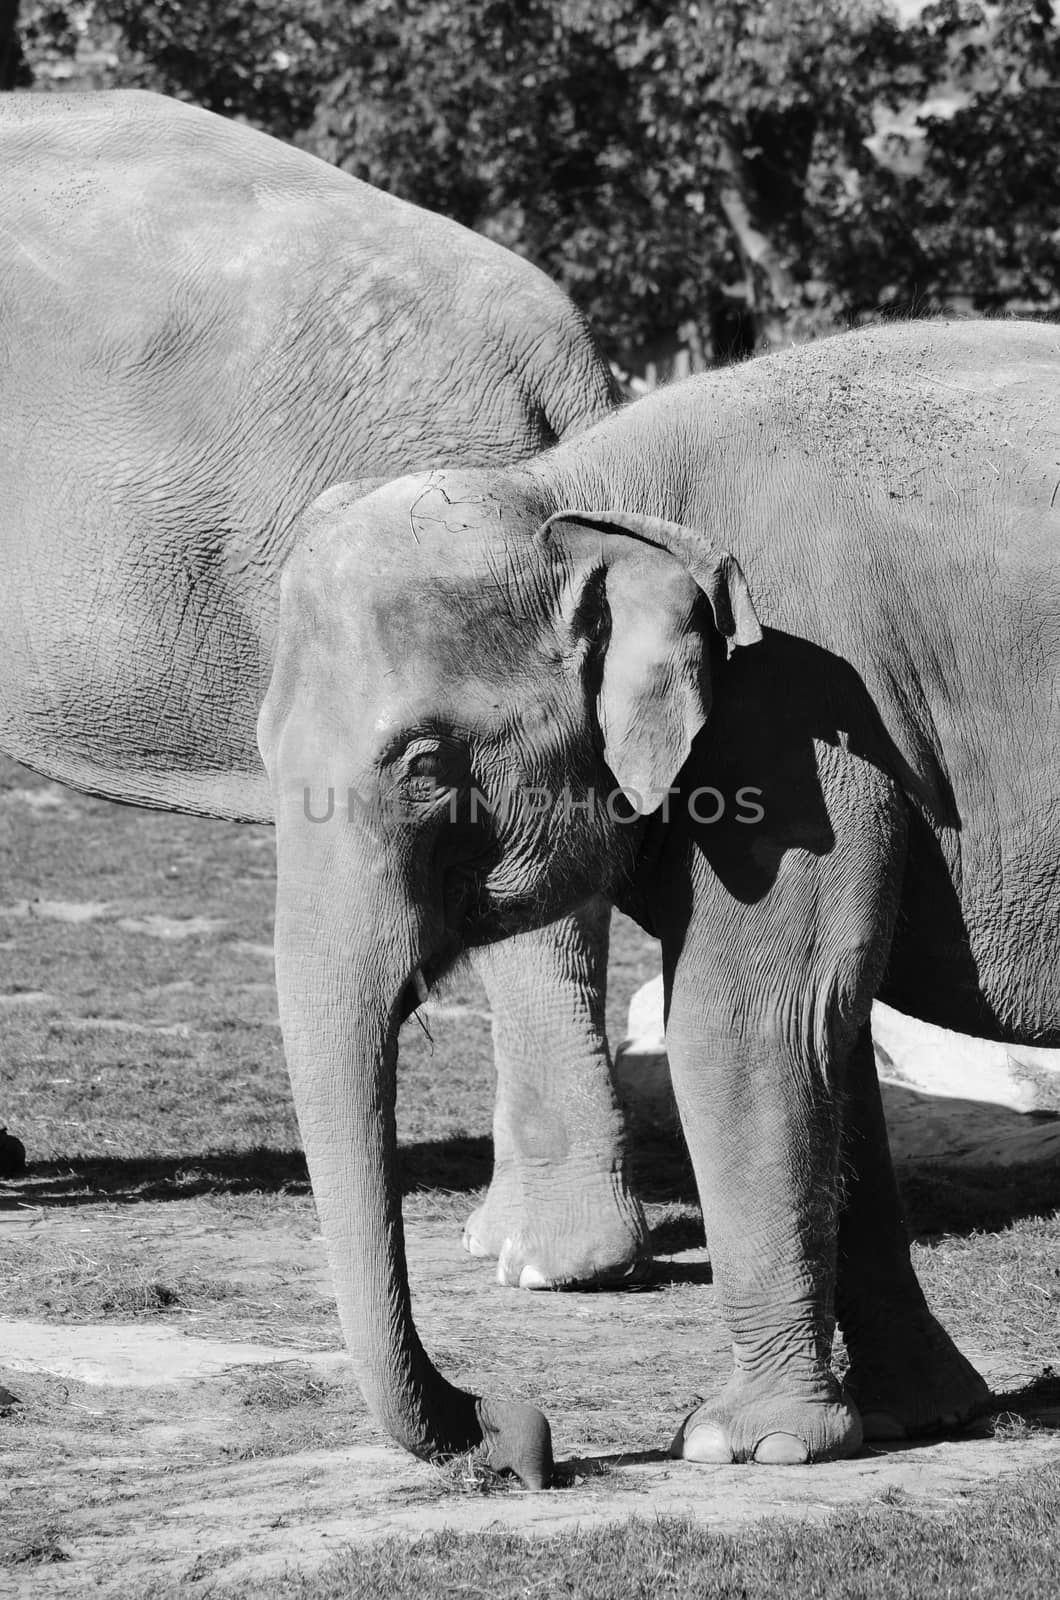 elephants by sarkao